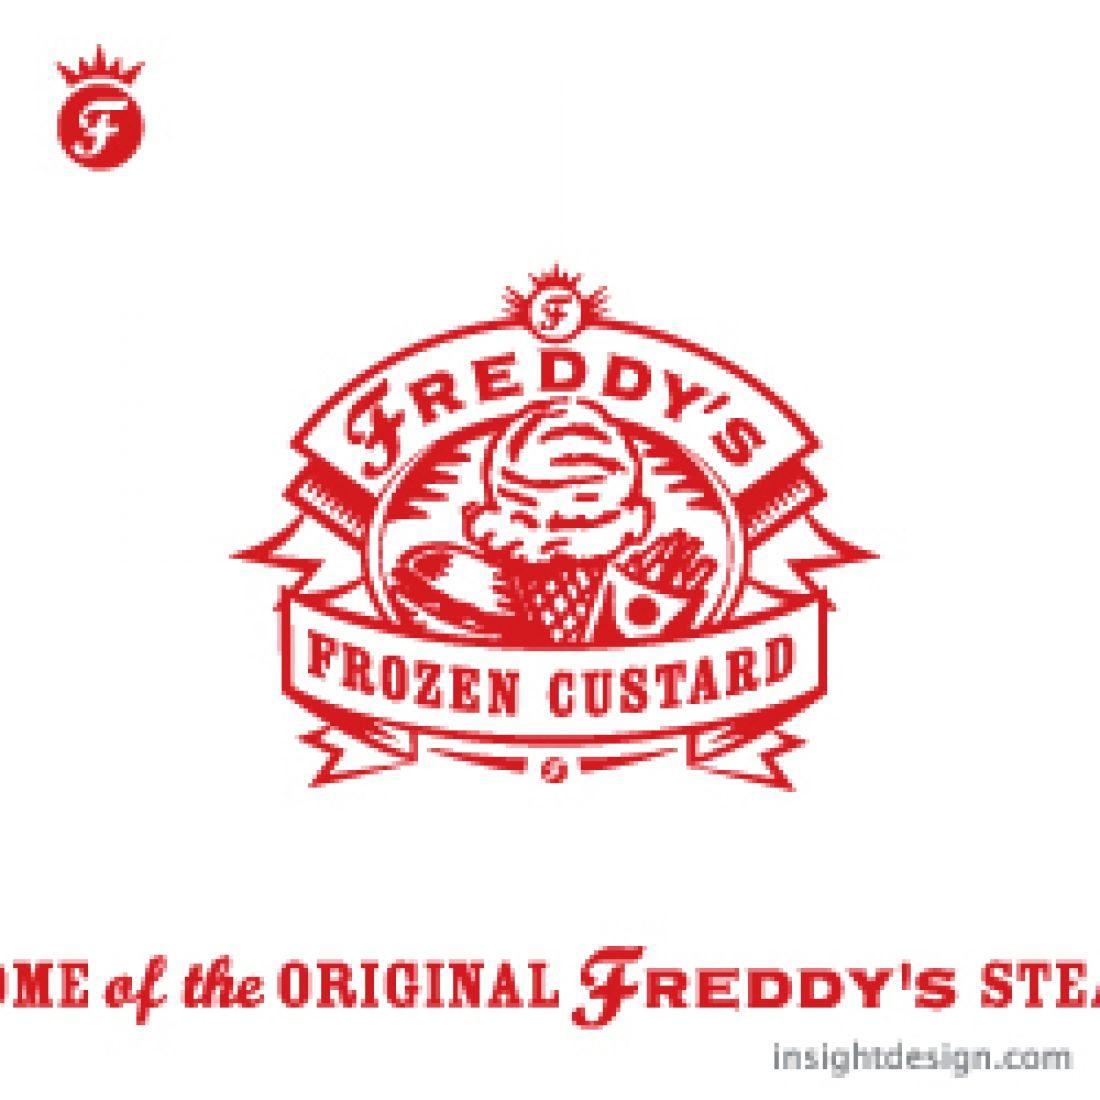 Freddy's Logo - Freddy's Frozen Custard logo design - Insight Design